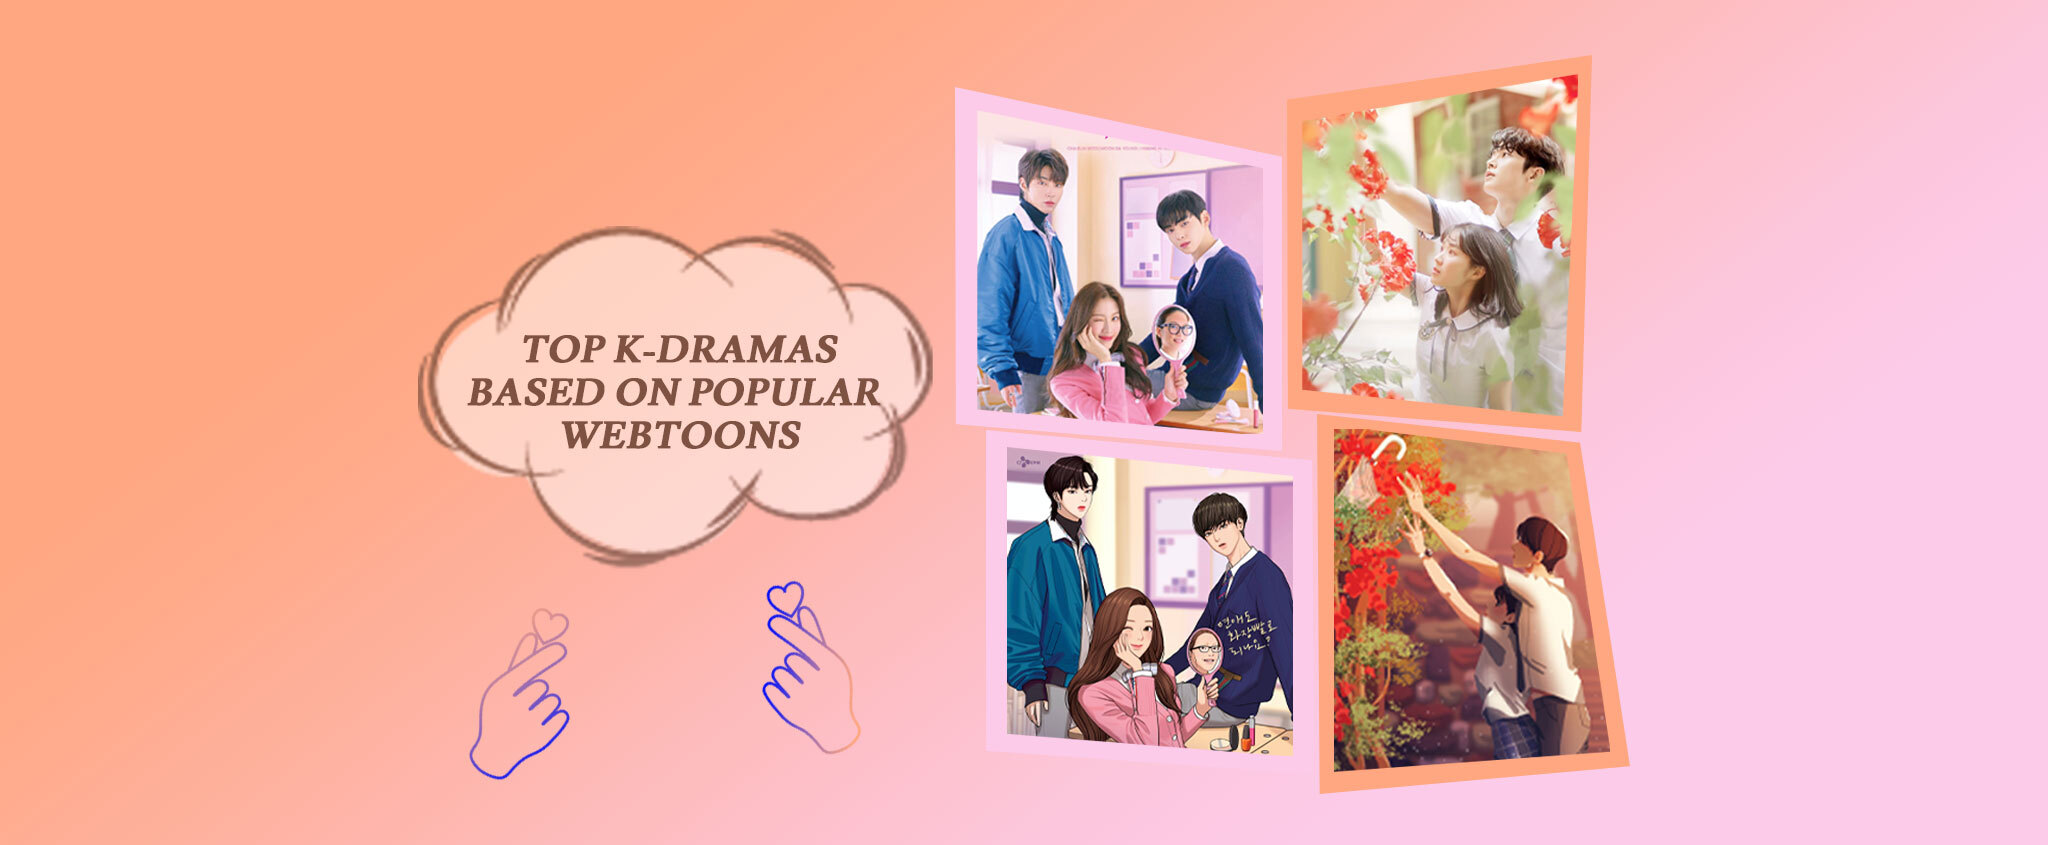 Top K-dramas Based on Popular Webtoons